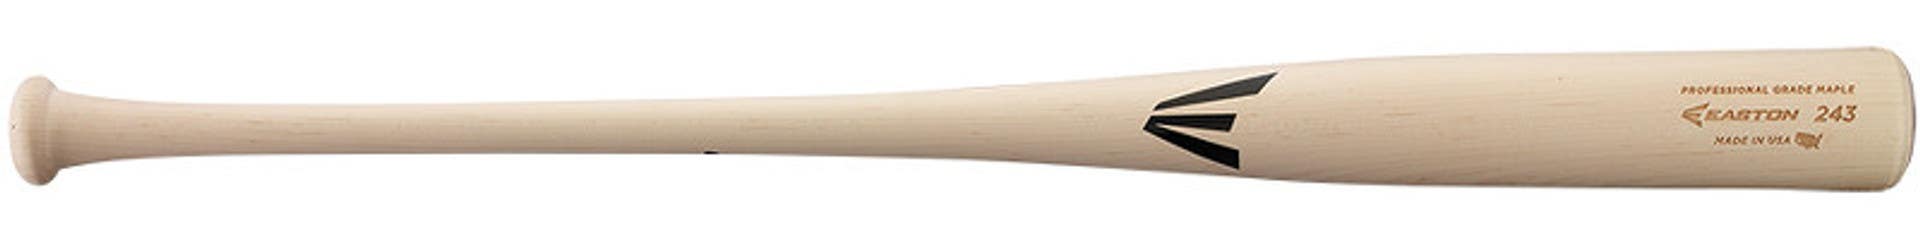 New BBCOR Certified Easton Maple 243 Bat (-3) 29 oz 32"